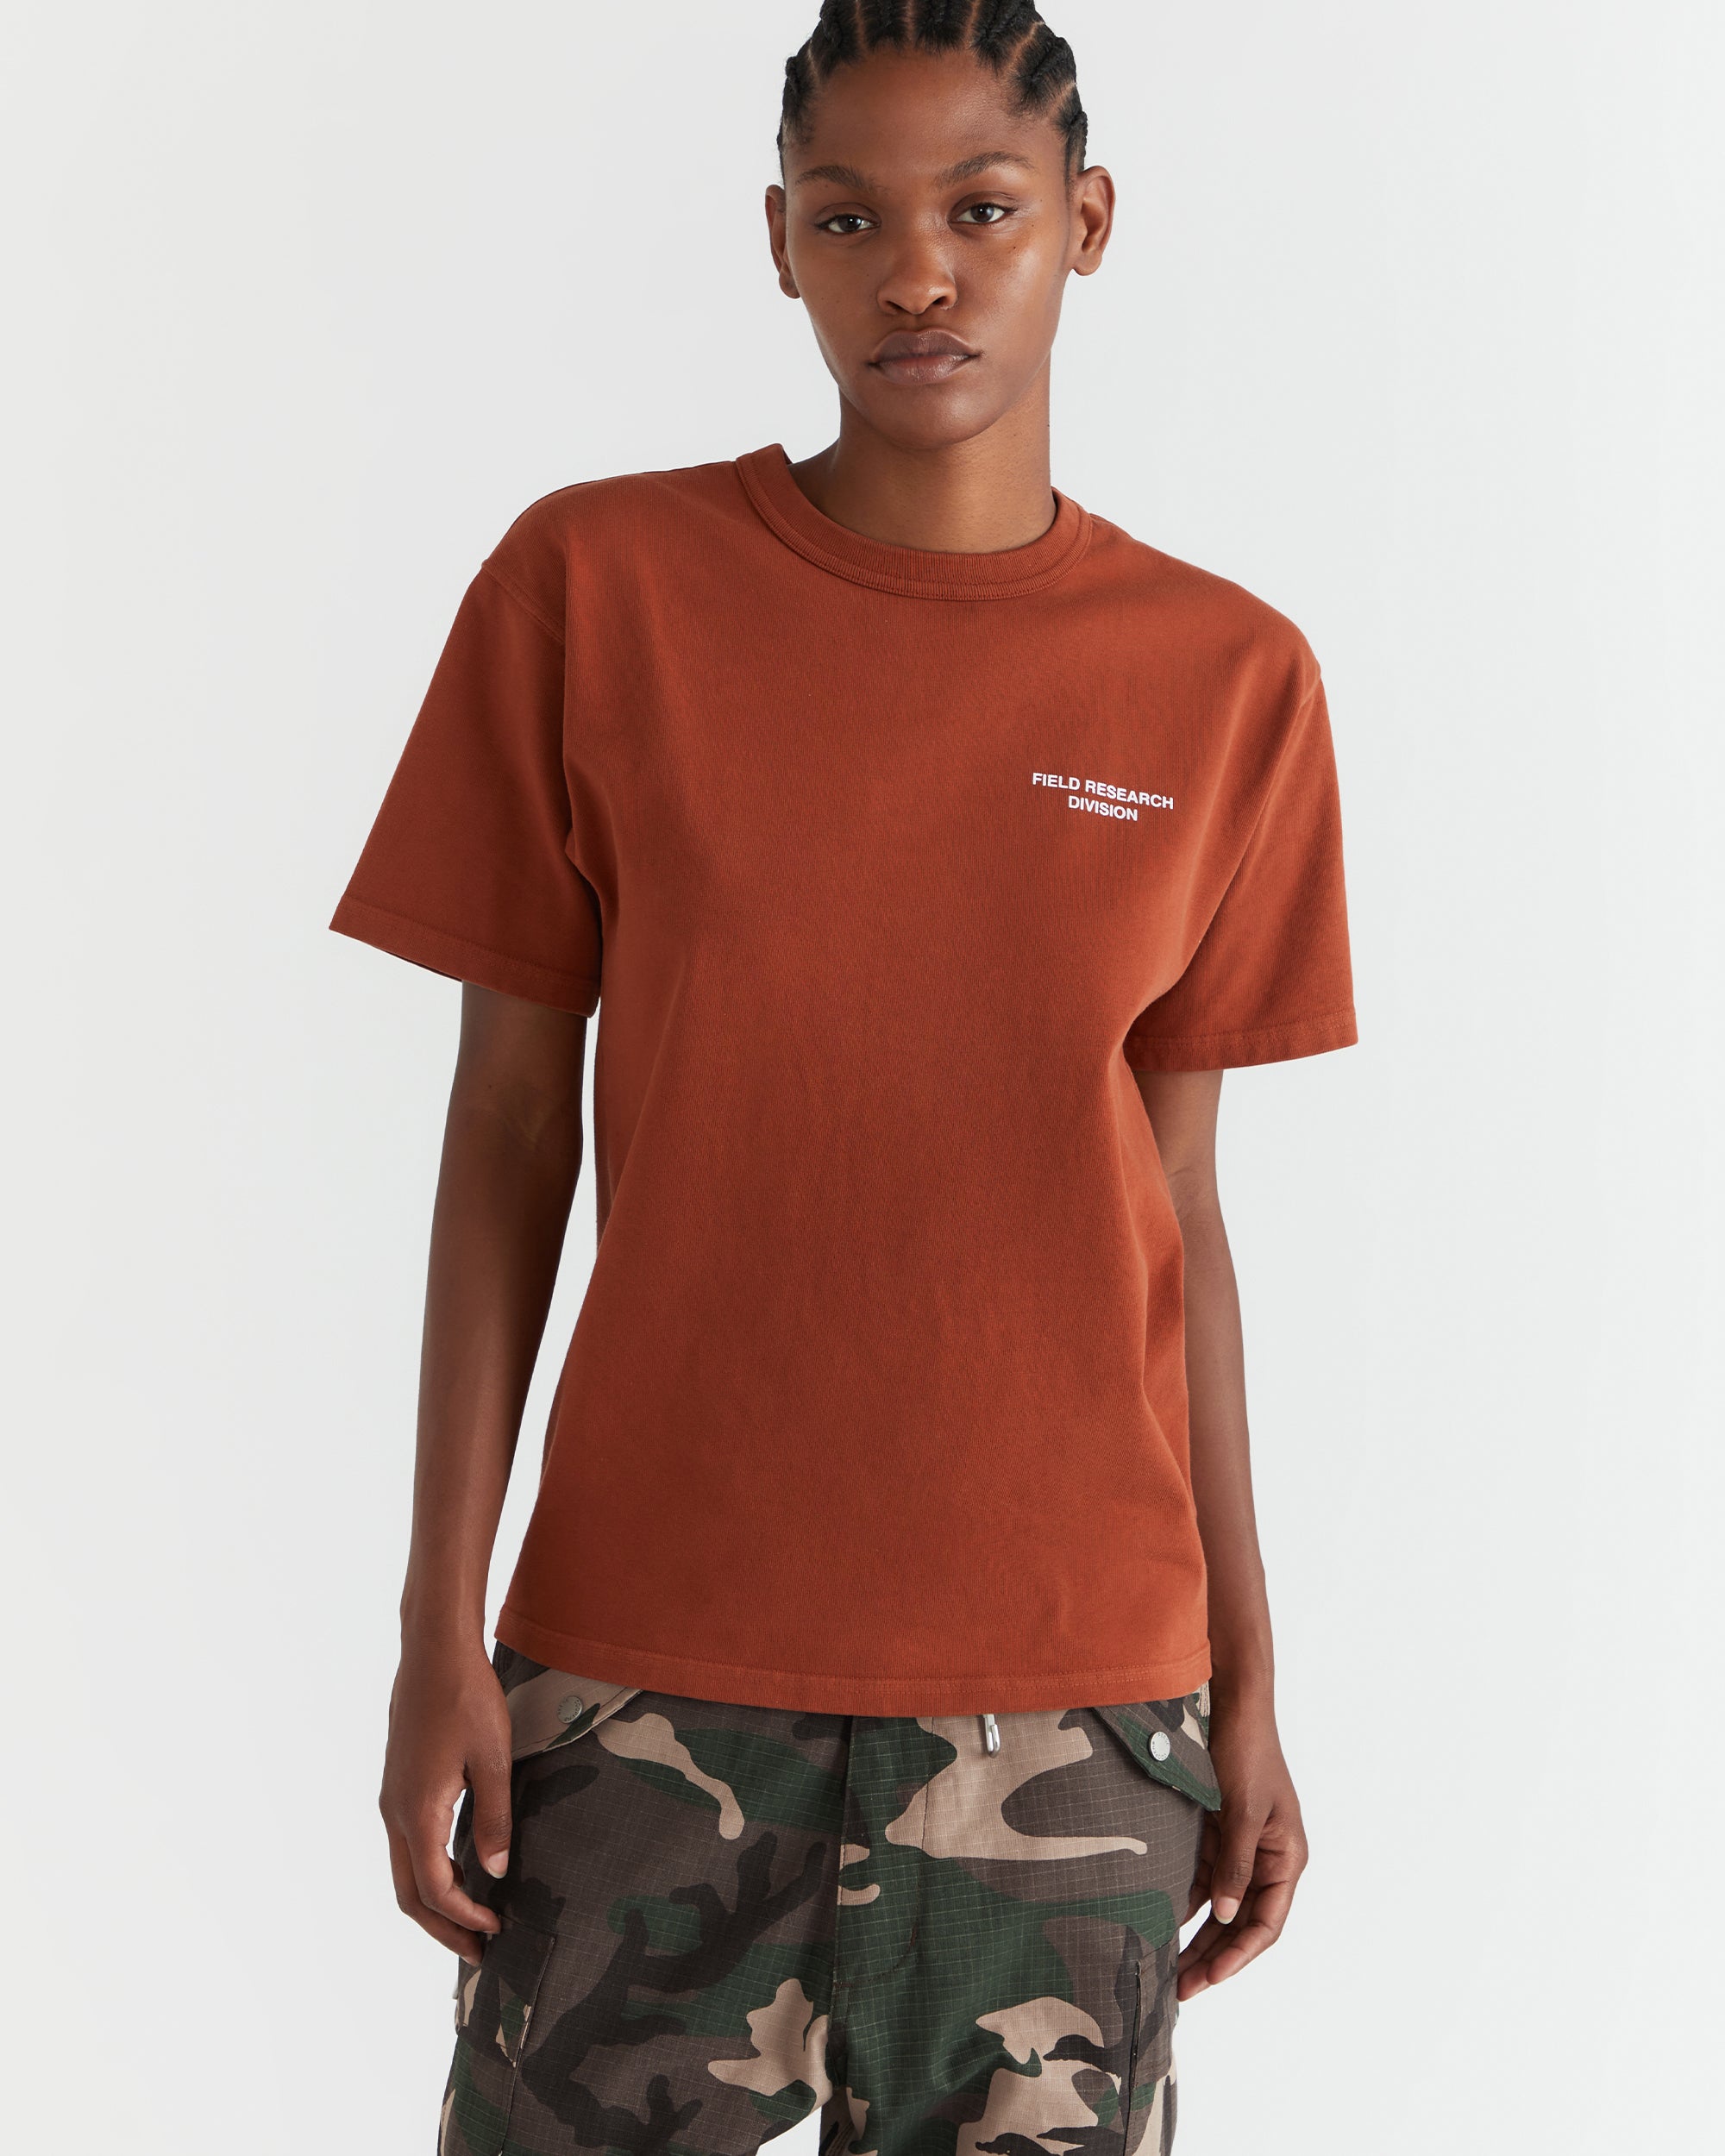 Women - Field Research Division T-Shirt - Burnt Orange - 3